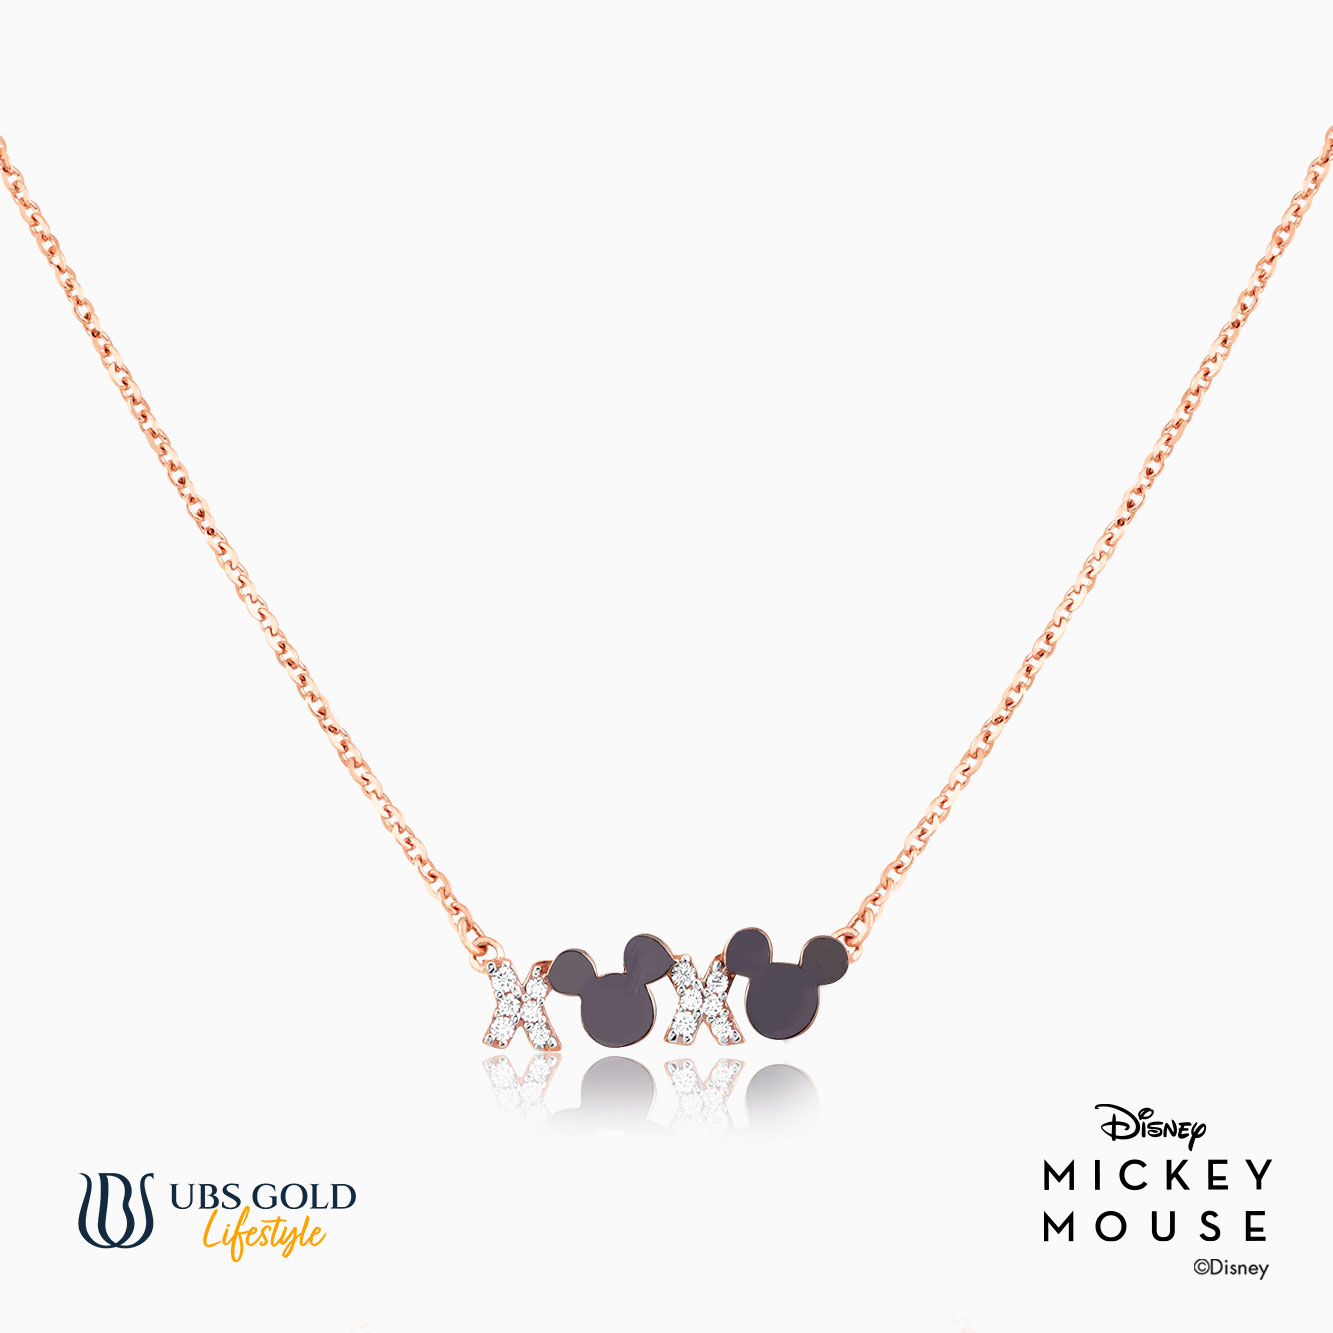 UBS Kalung Emas Disney Mickey Mouse - Kky0307 - 17K